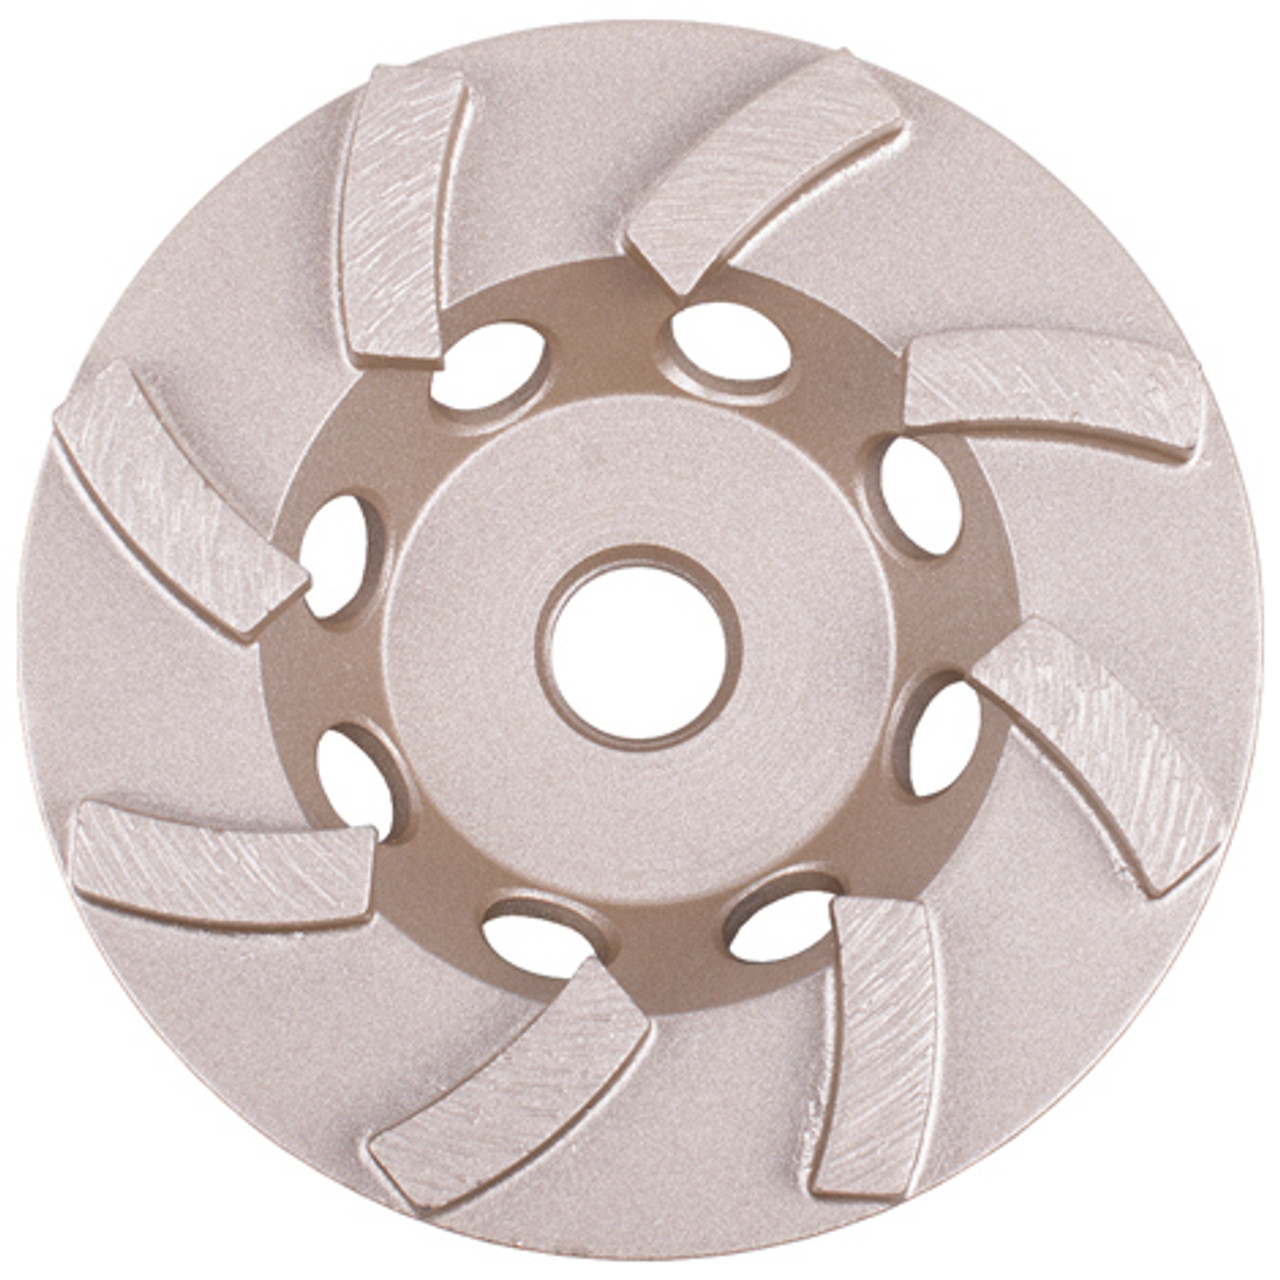 Diamond Vantage 4 x 7/8-5/8 inch Turbo Single Cup Wheel, X1 Standard Grade